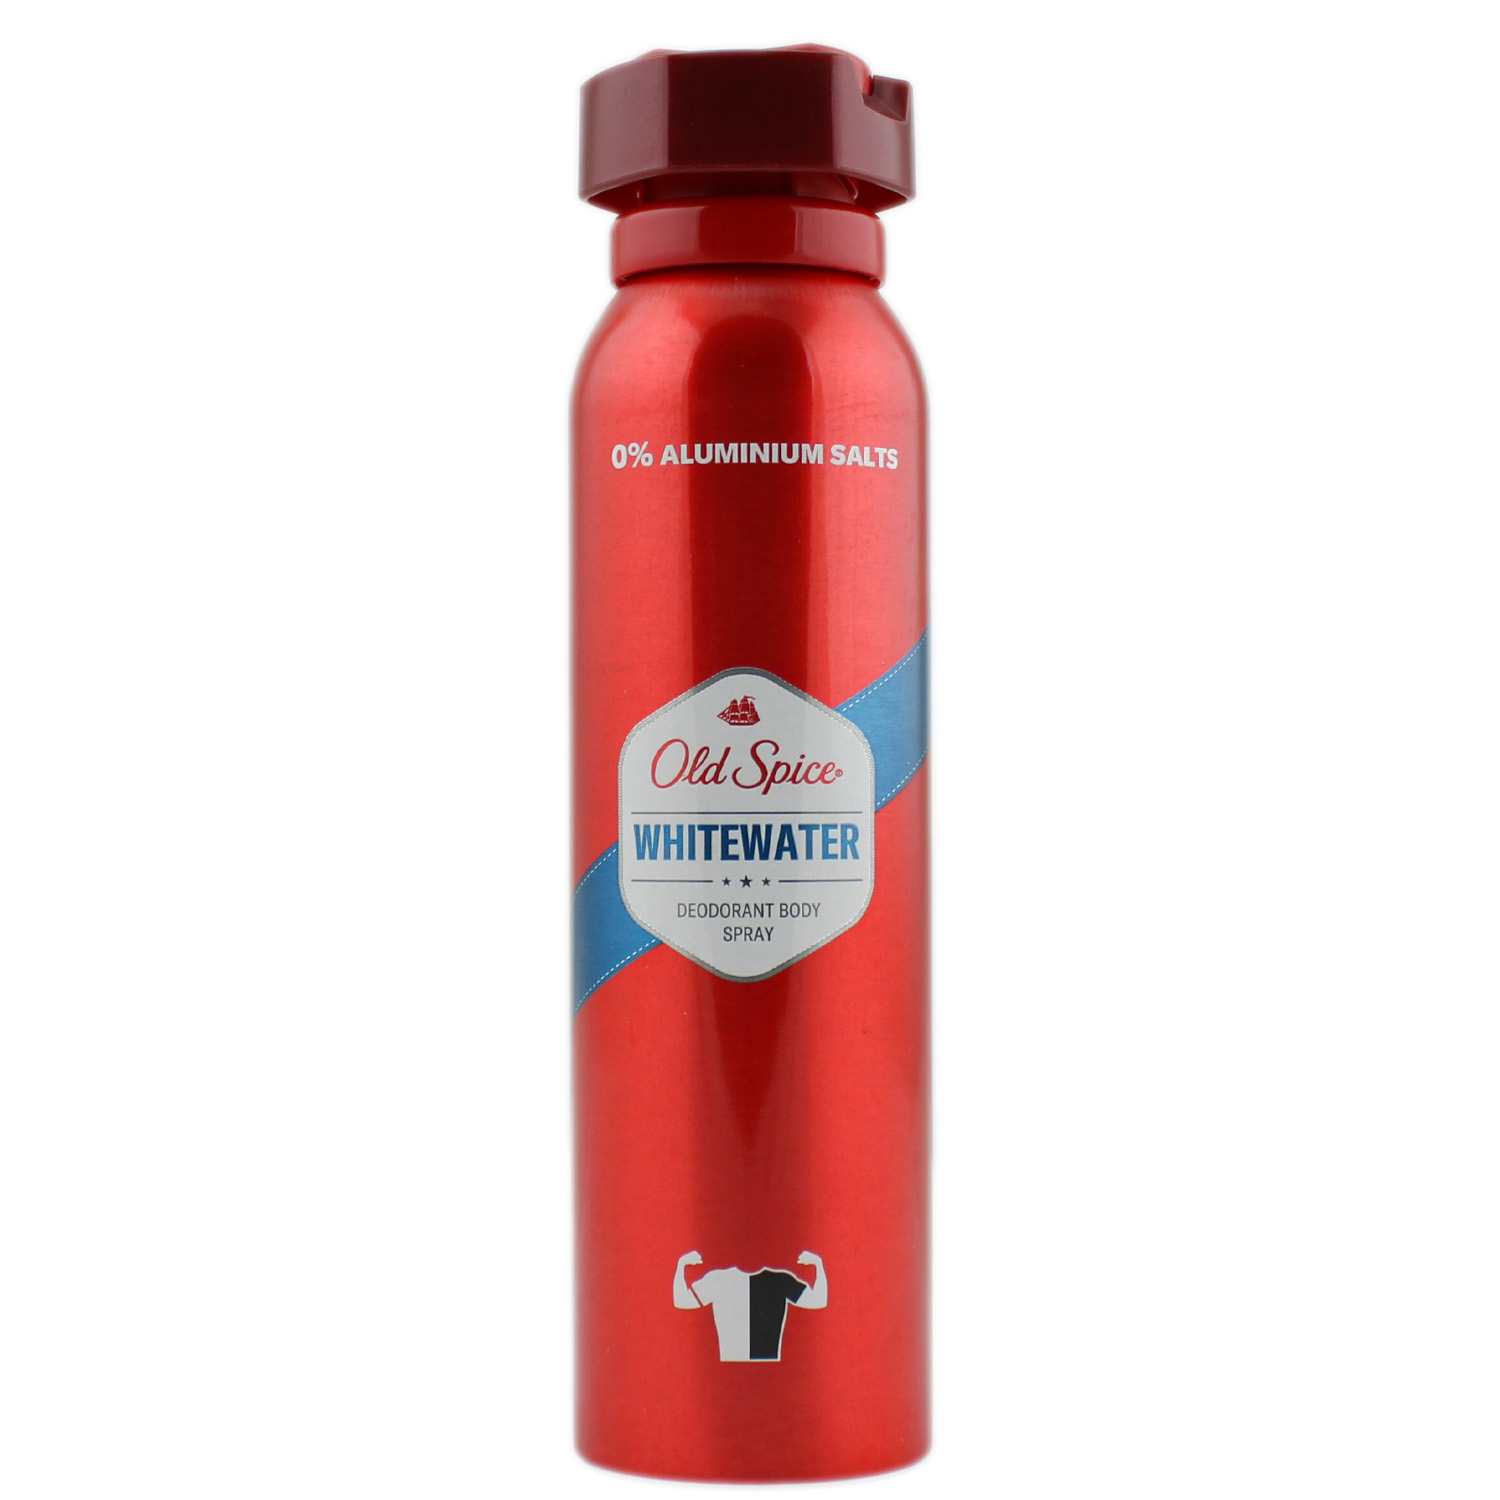 Old Spice Whitewater Deodorant Spray 150ml